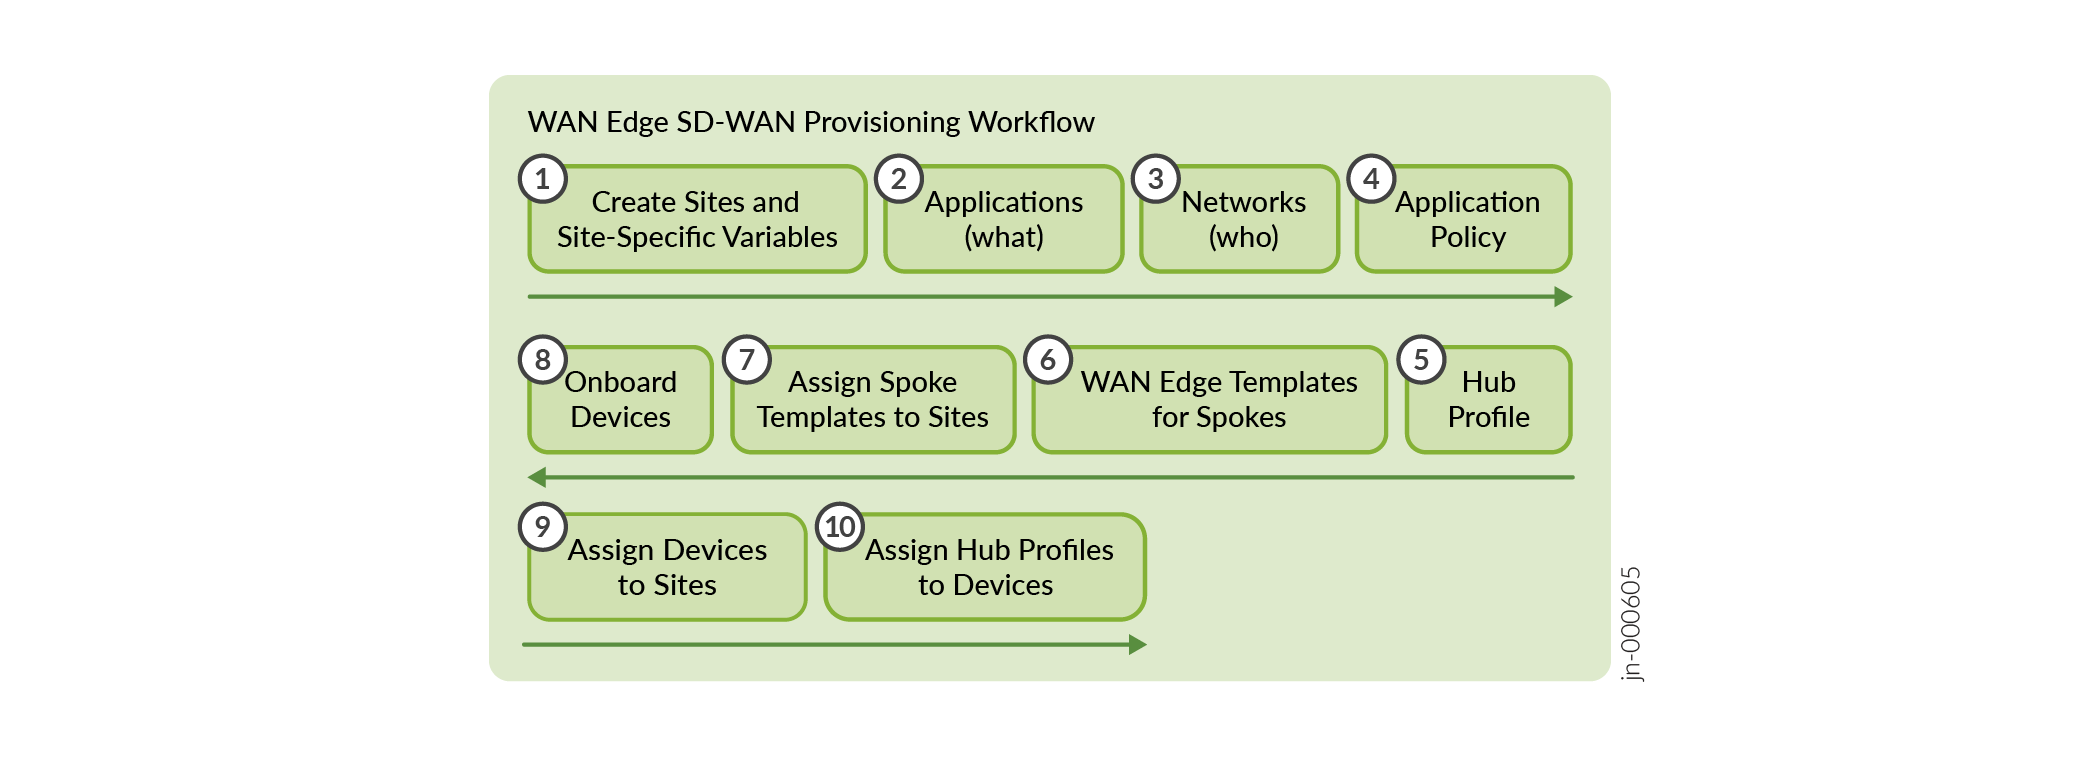 WAN Configuration Workflow